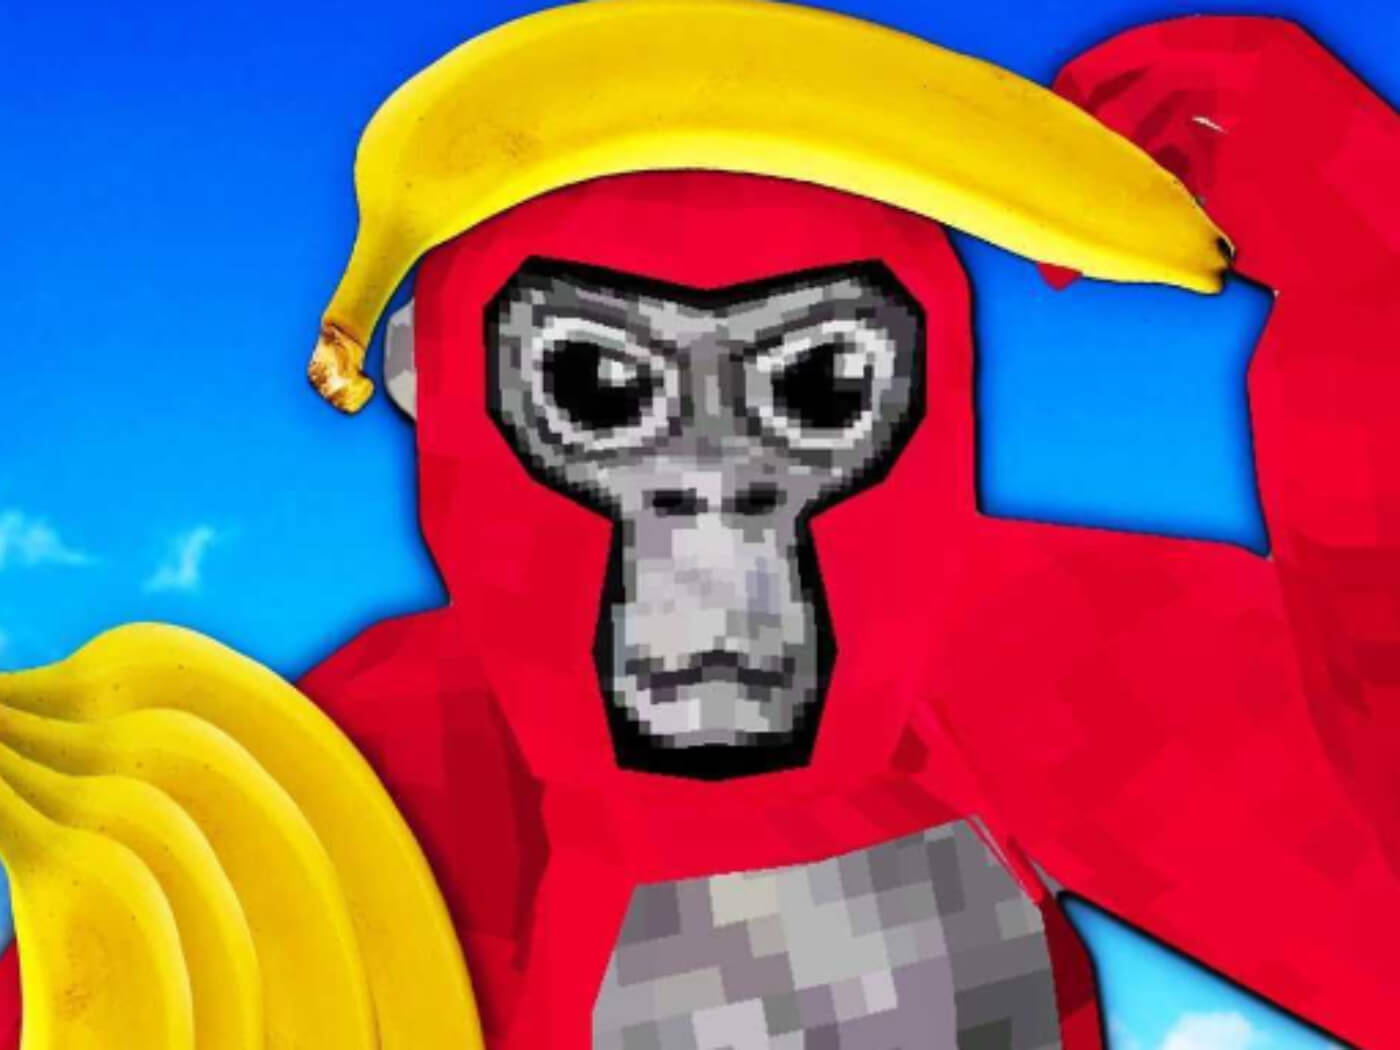 Funny Monkey Memes GIFs